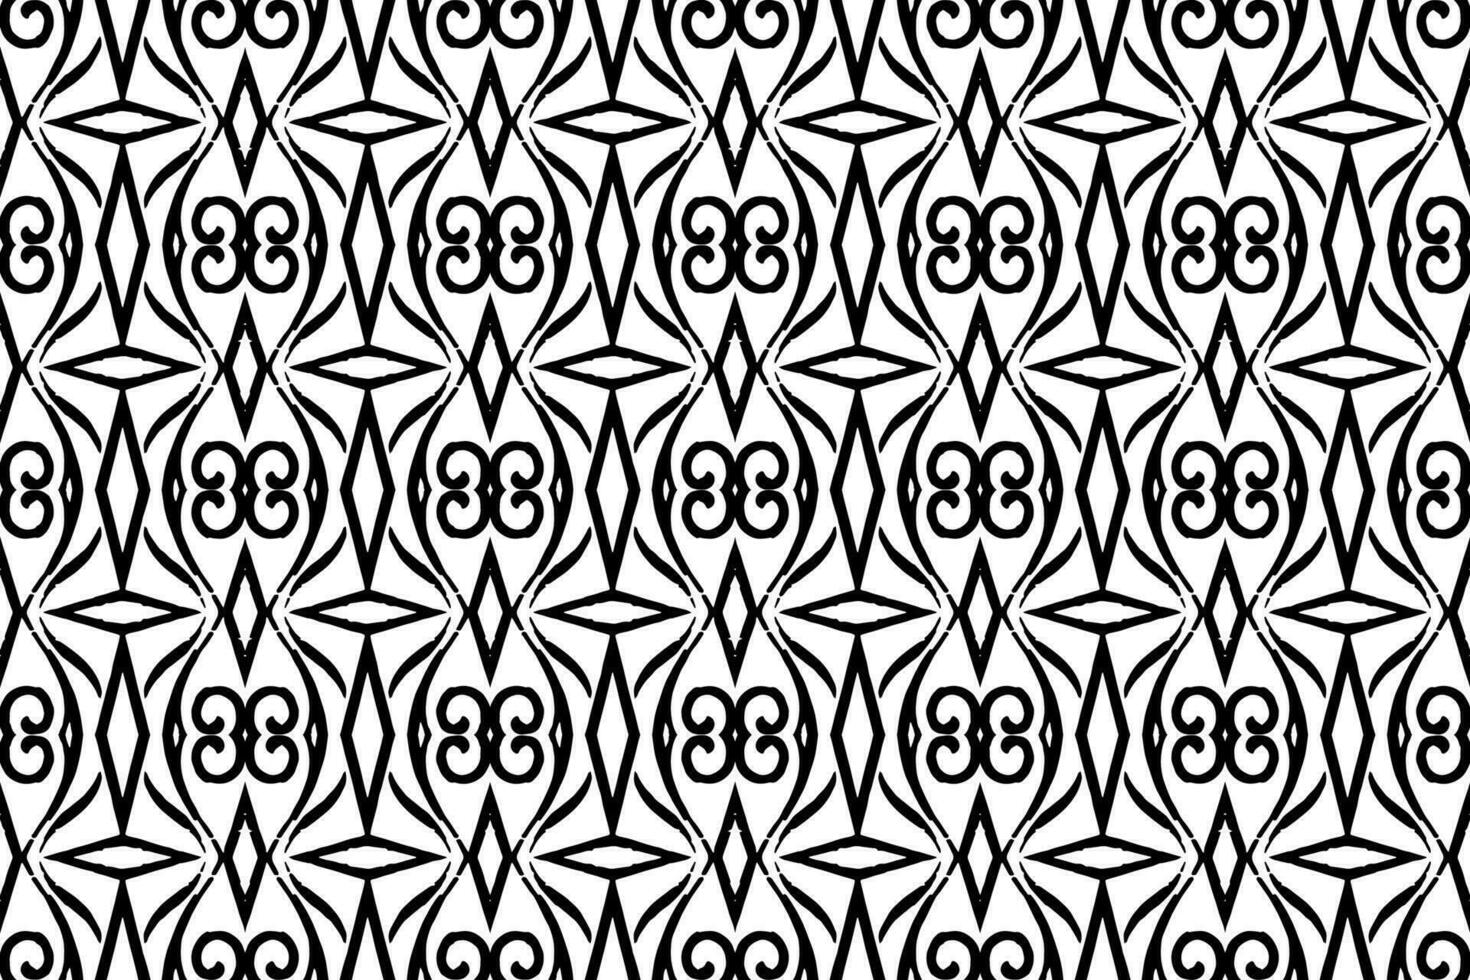 Seamless batik pattern,geometric tribal pattern,it resembles ethnic boho,aztec style,ikat style.luxury decorative fabric black and white seamless pattern for famous banners. vector